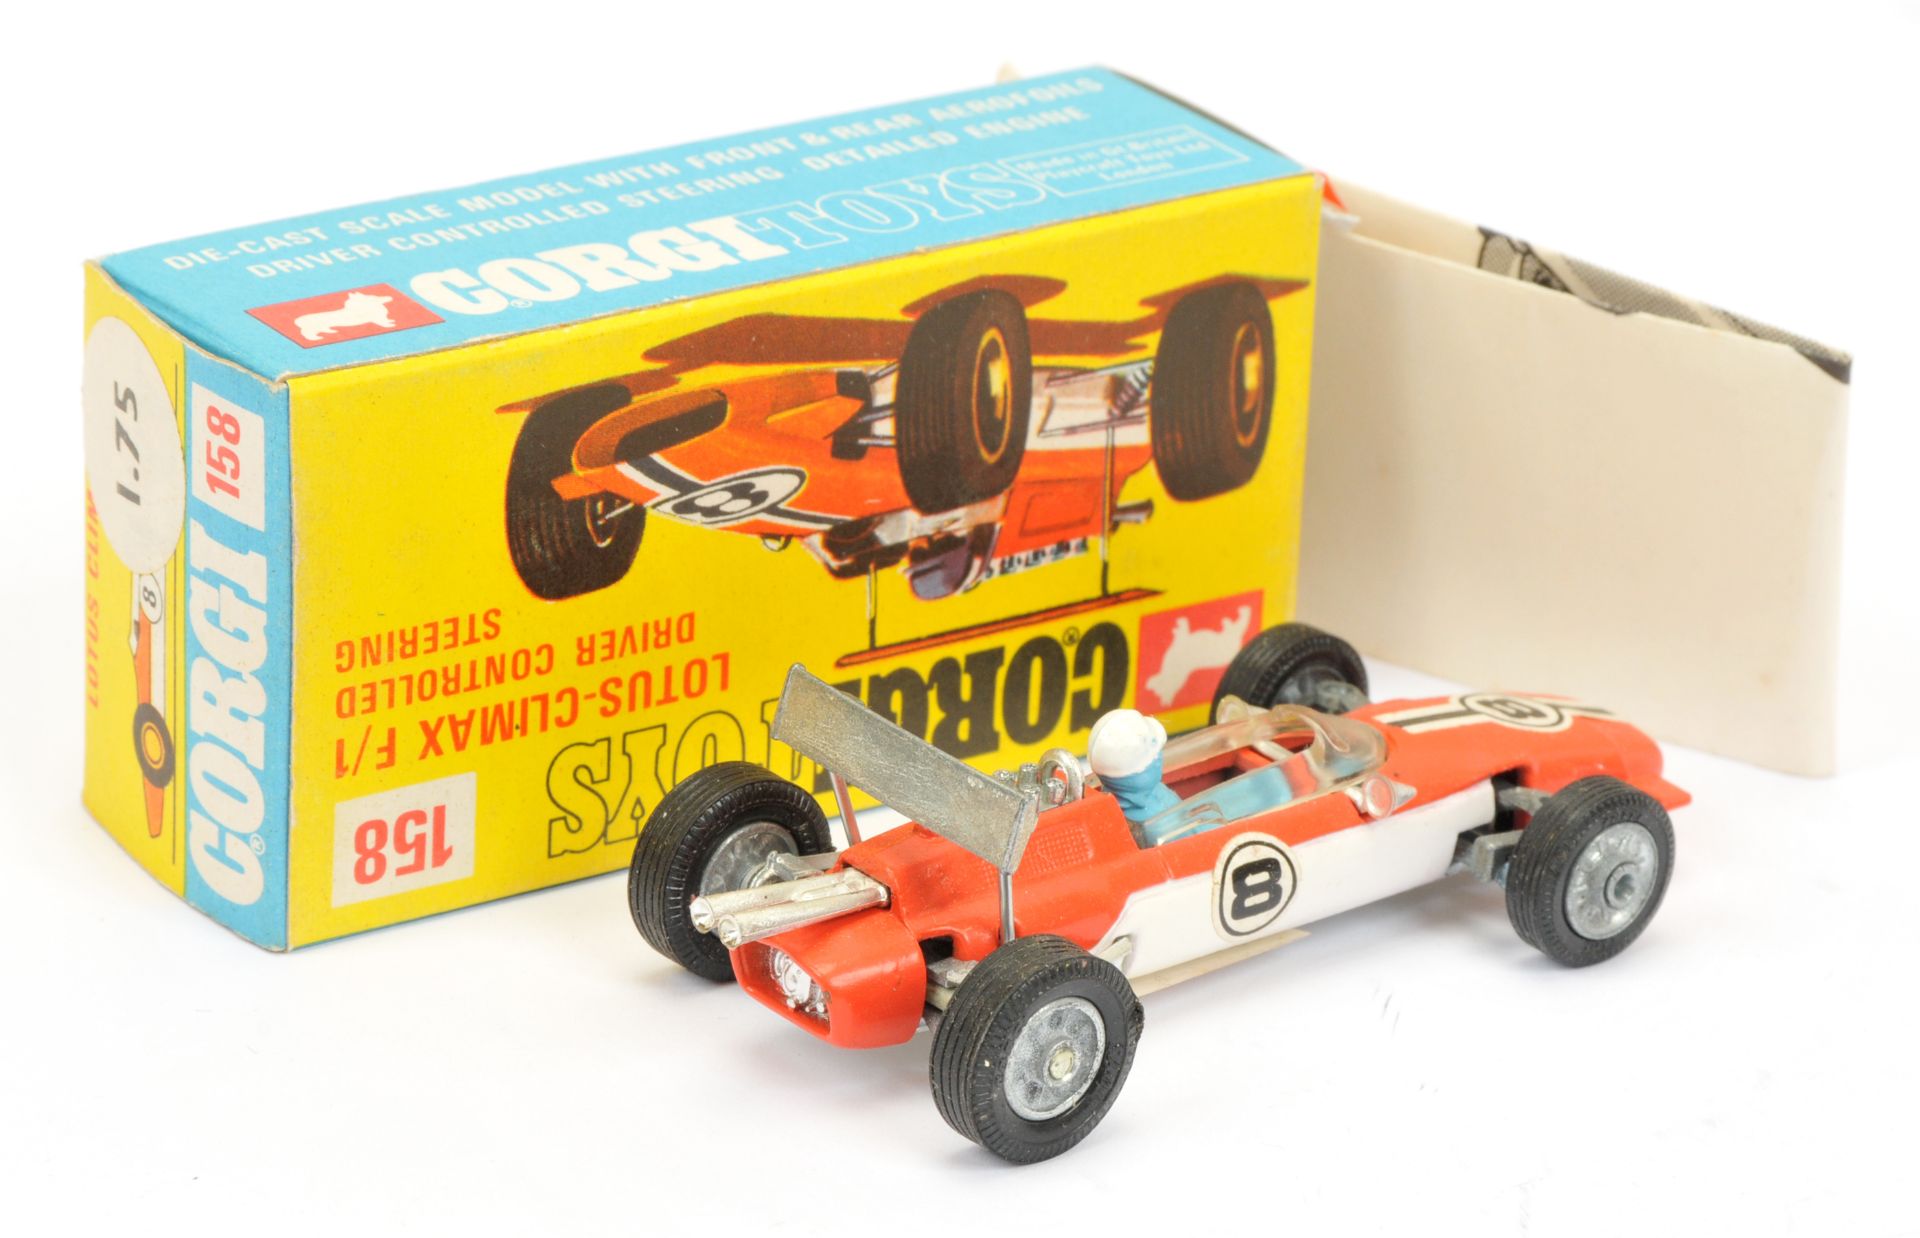 Corgi Toys 158 lotus Climax Formula 1 racing car - Two-Tone orange and white, figure driver, cast... - Image 2 of 2